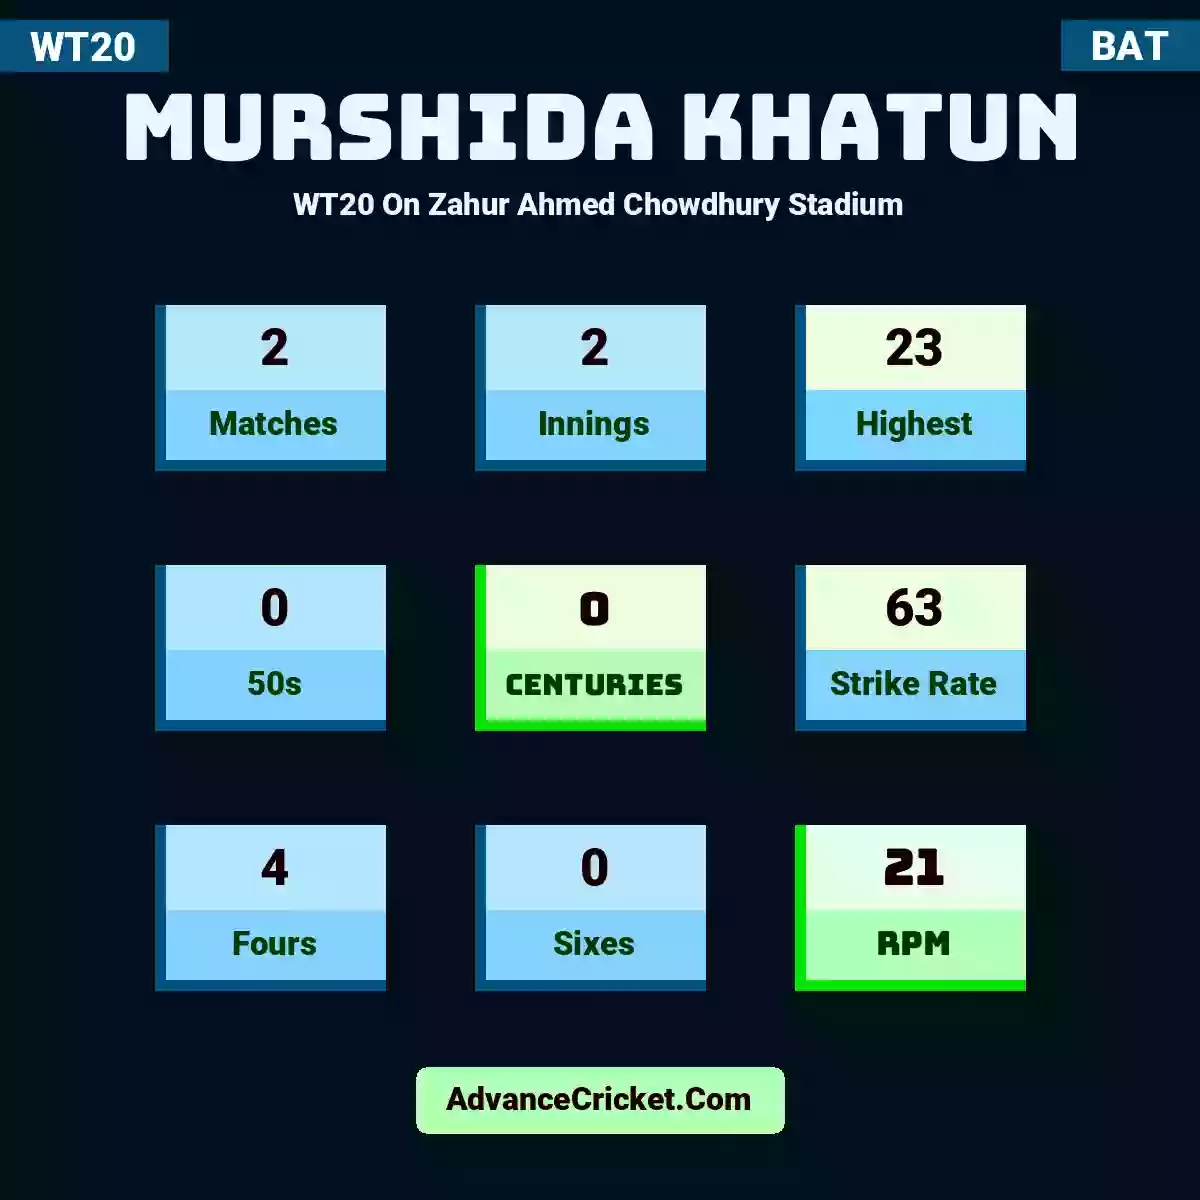 Murshida Khatun WT20  On Zahur Ahmed Chowdhury Stadium, Murshida Khatun played 2 matches, scored 23 runs as highest, 0 half-centuries, and 0 centuries, with a strike rate of 63. M.Khatun hit 4 fours and 0 sixes, with an RPM of 21.